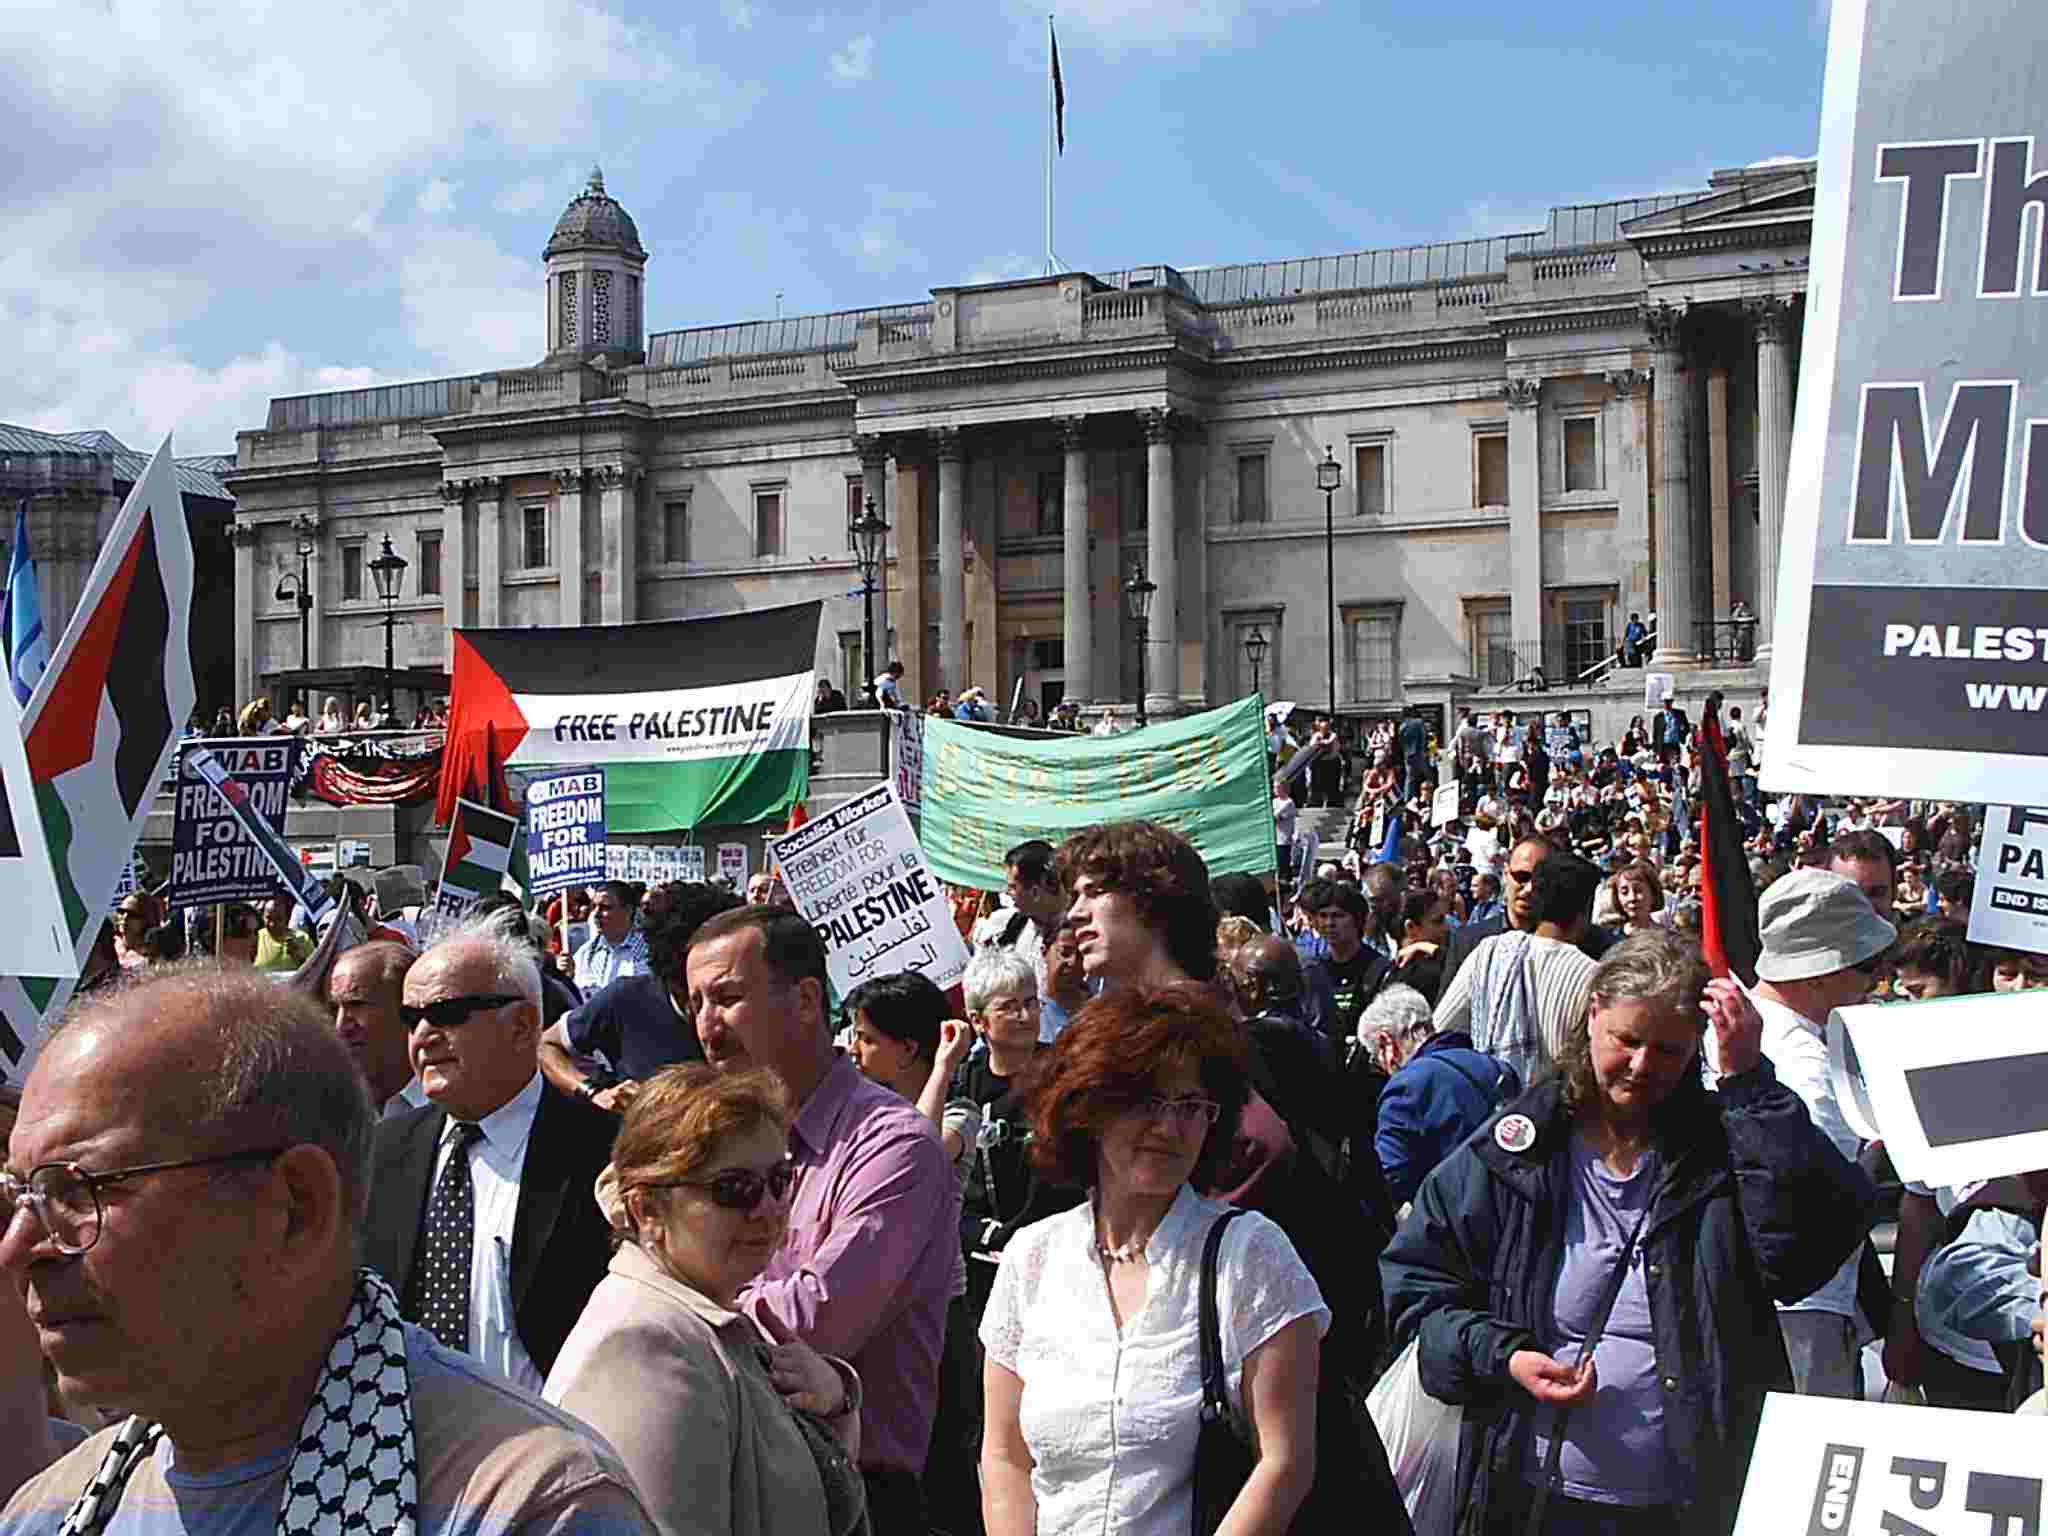 York's Banner amongst the crowd